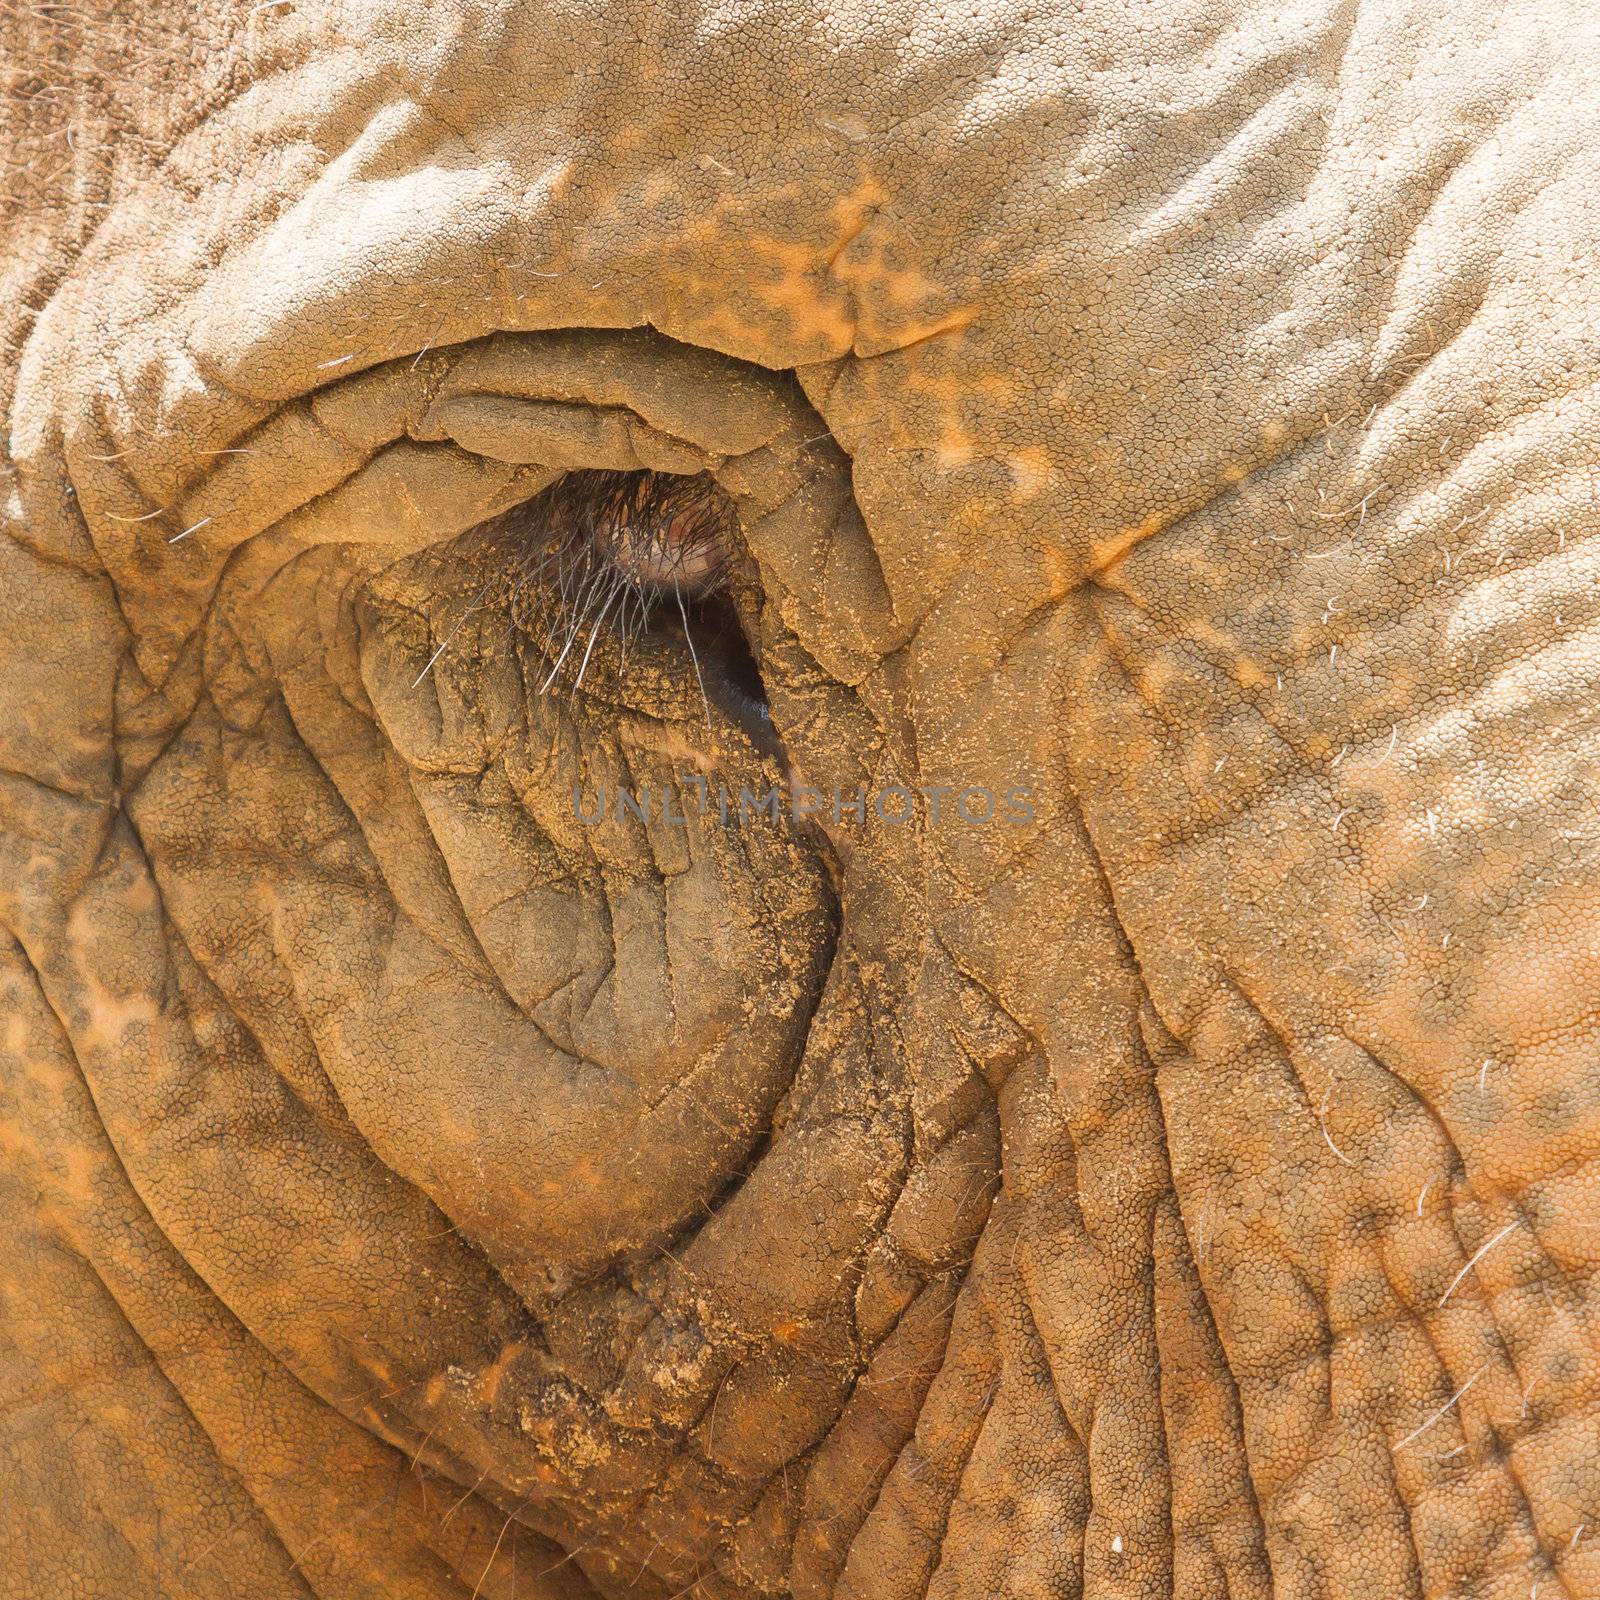 Elephant eye detail, looking sad in a Vietnamese zoo (Saigon)